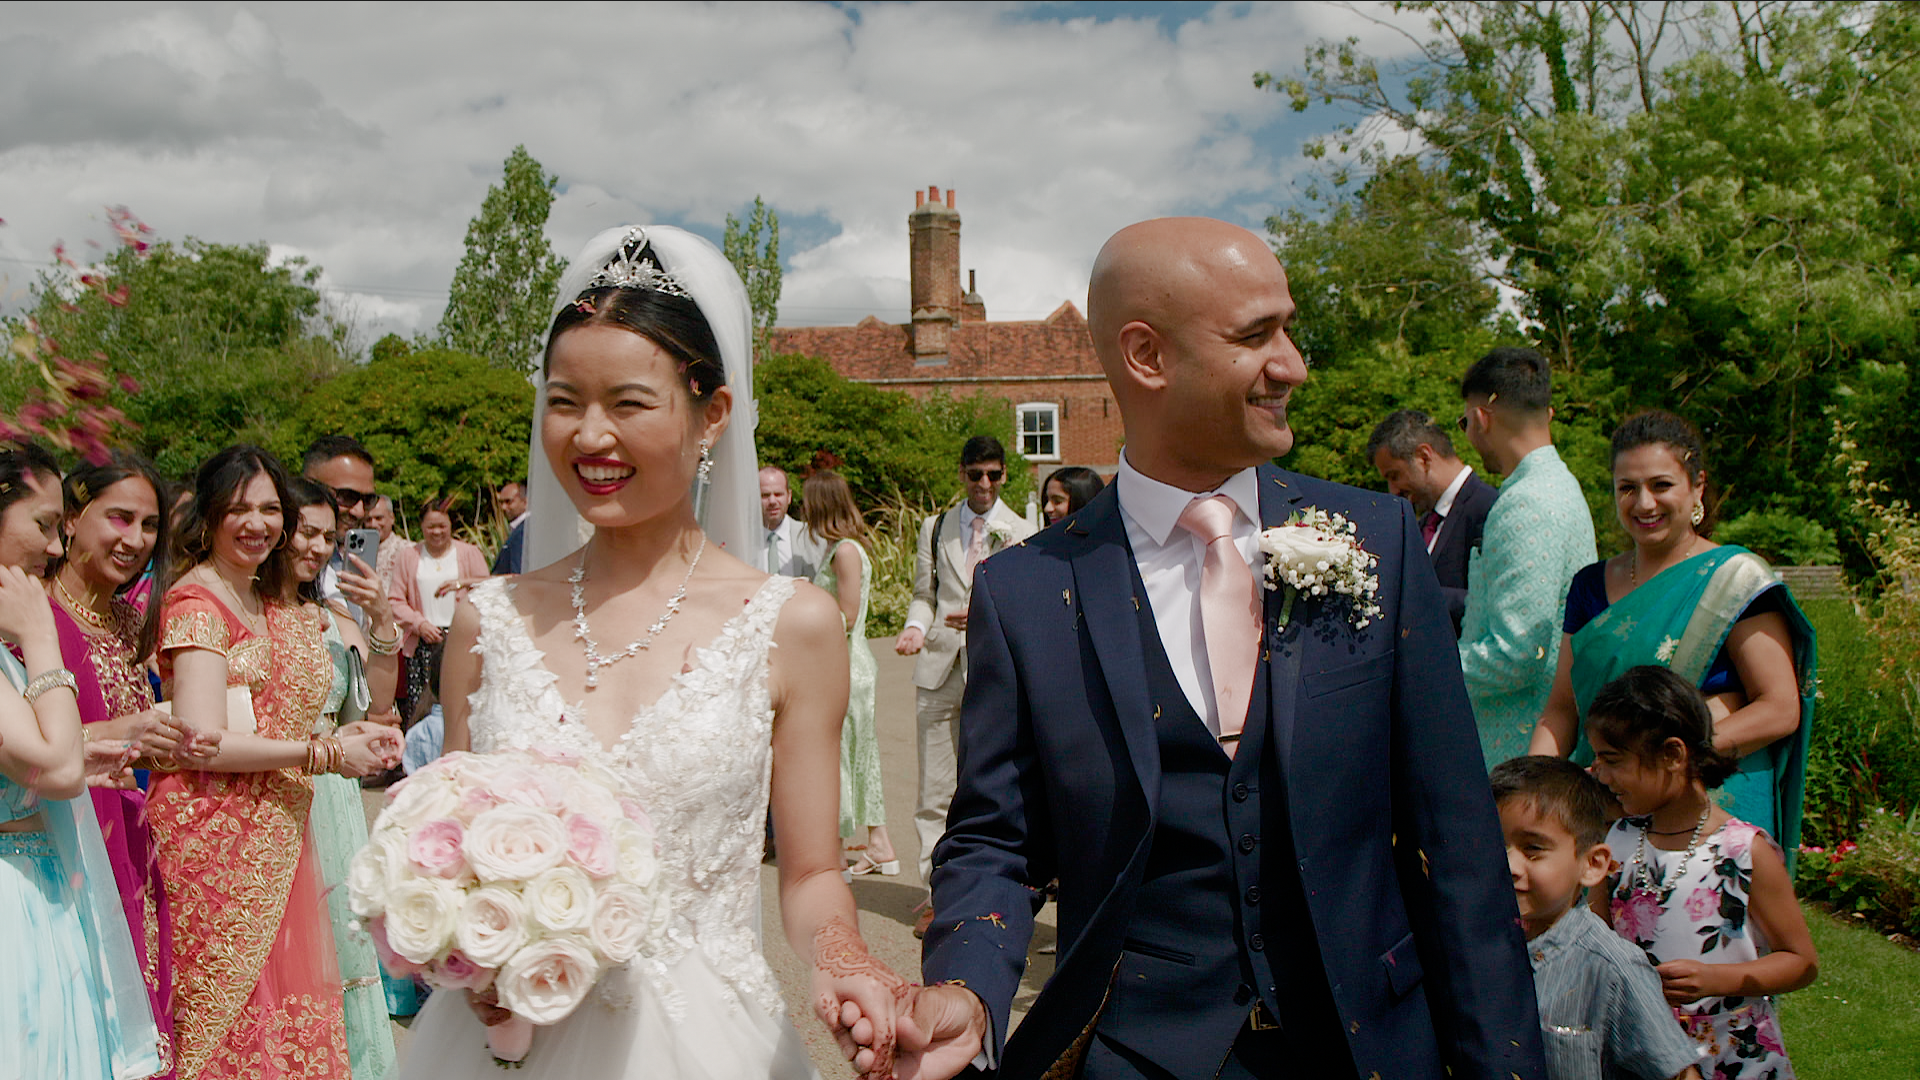 Shivram and Wei Wei's Wedding in Harrow, North West London